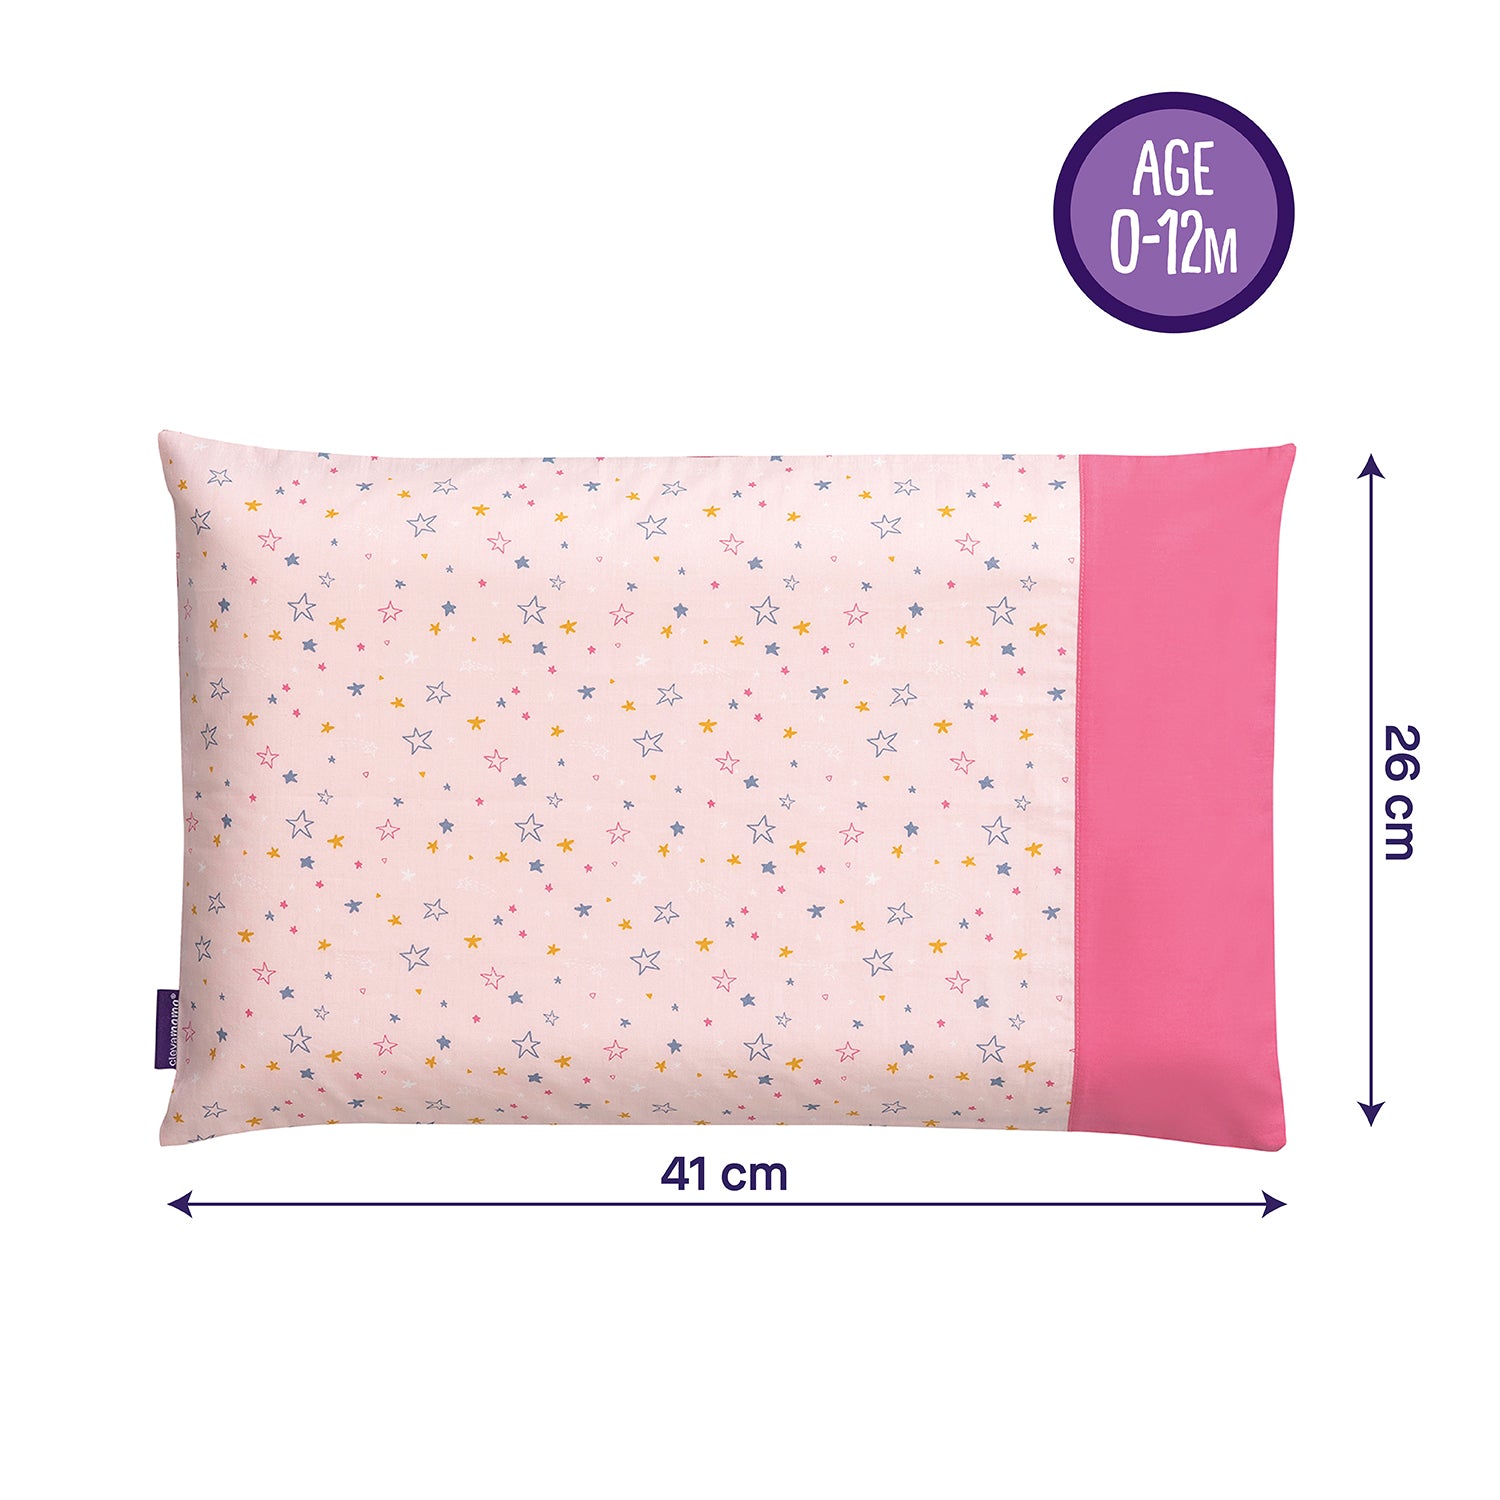 ClevaFoam Baby Pillow Case (Pink)